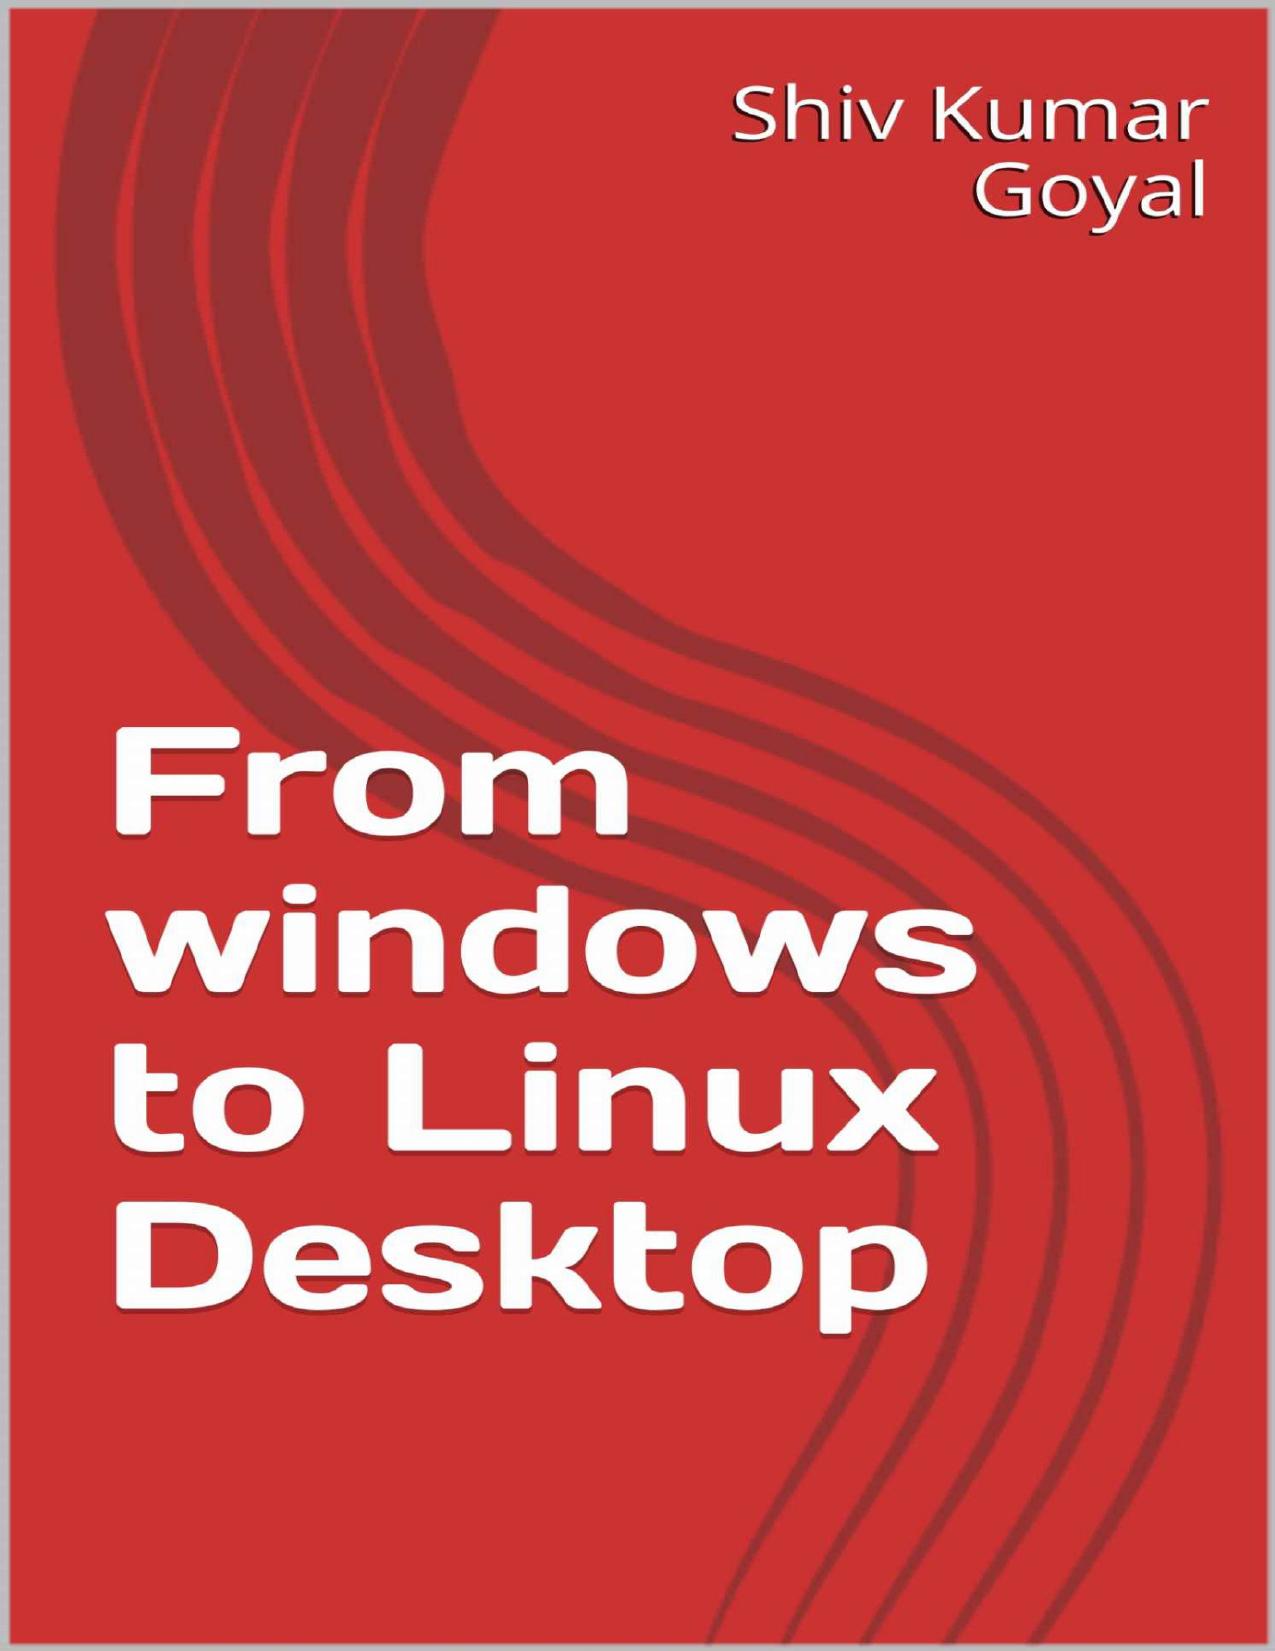 From windows to Linux Desktop by Shiv Kumar Goyal